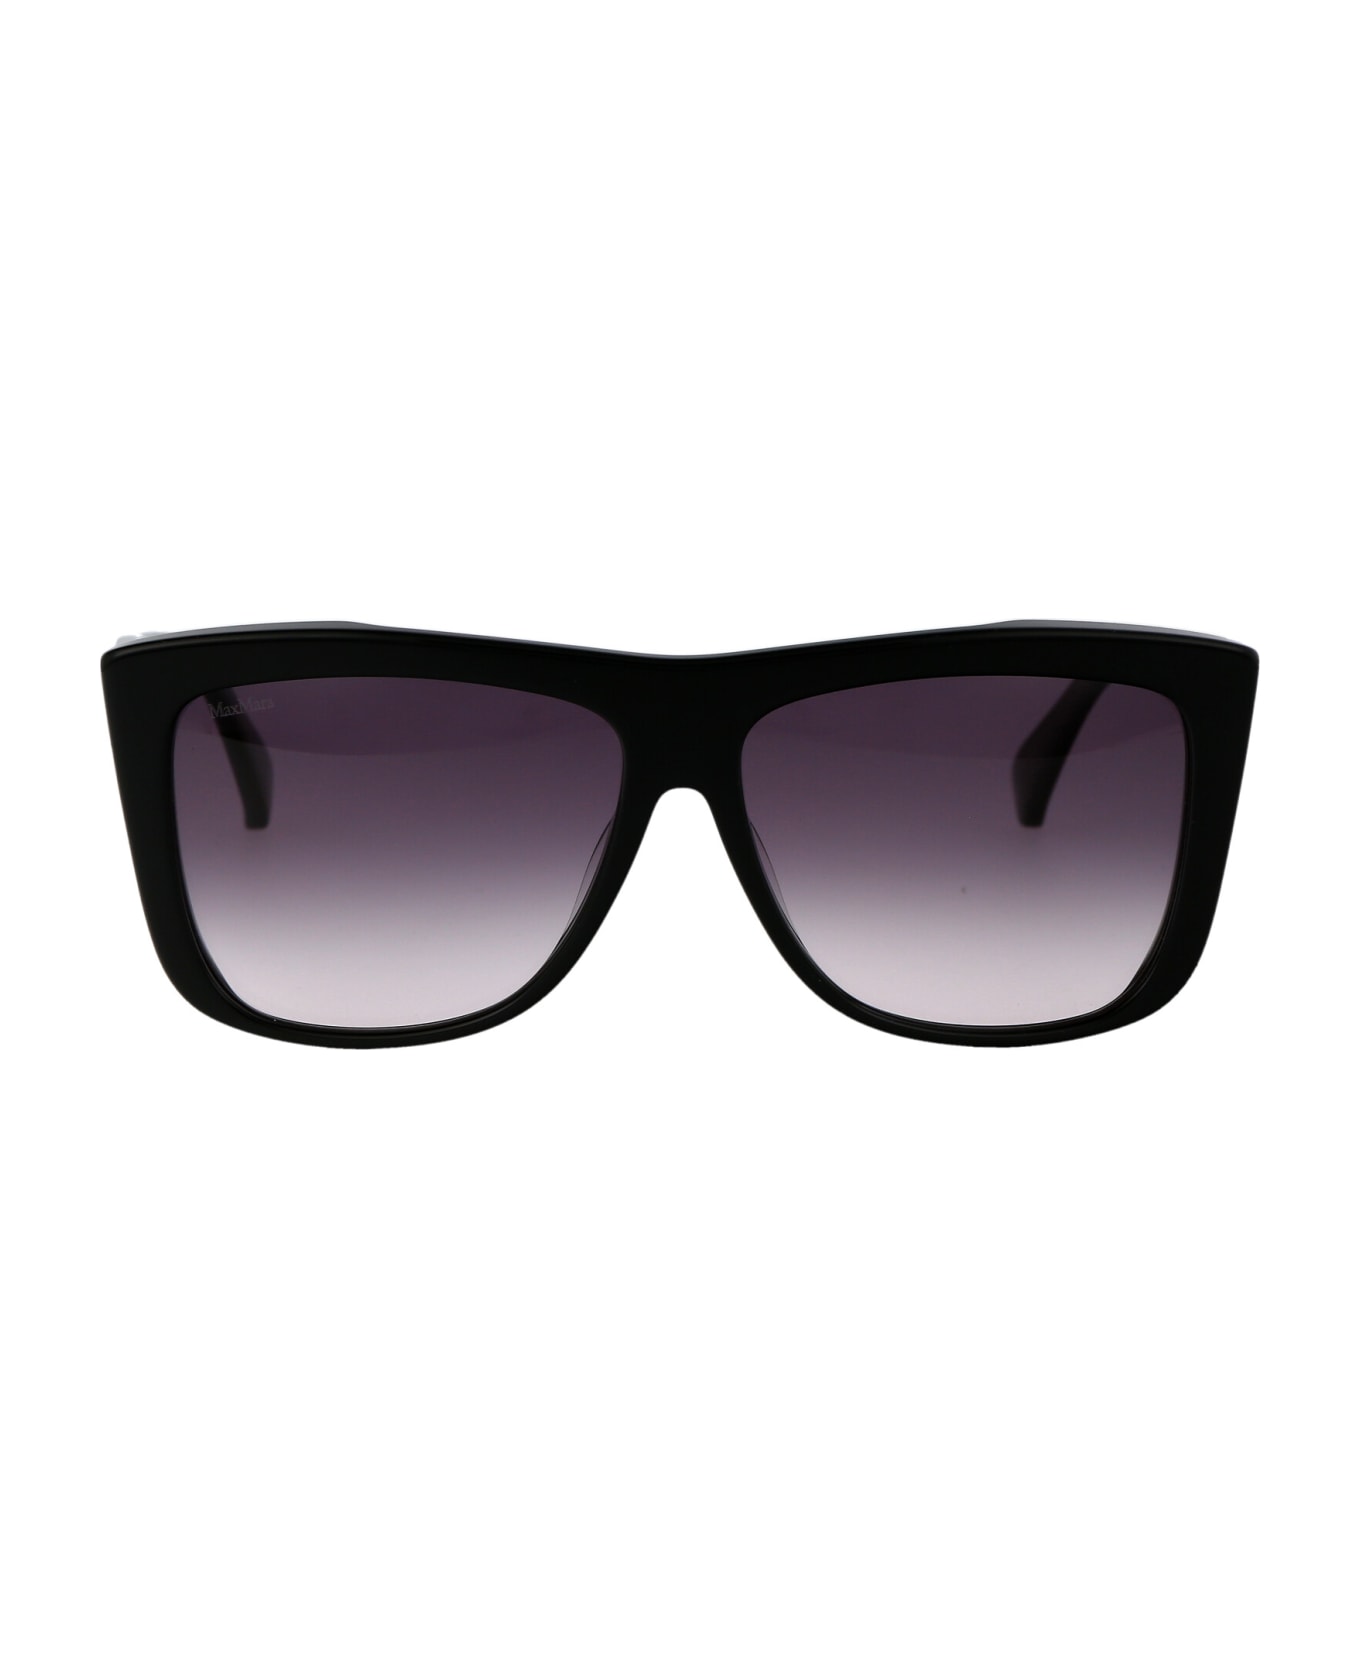 Max Mara Lee1 Sunglasses - 01B Nero Lucido/Fumo Grad サングラス